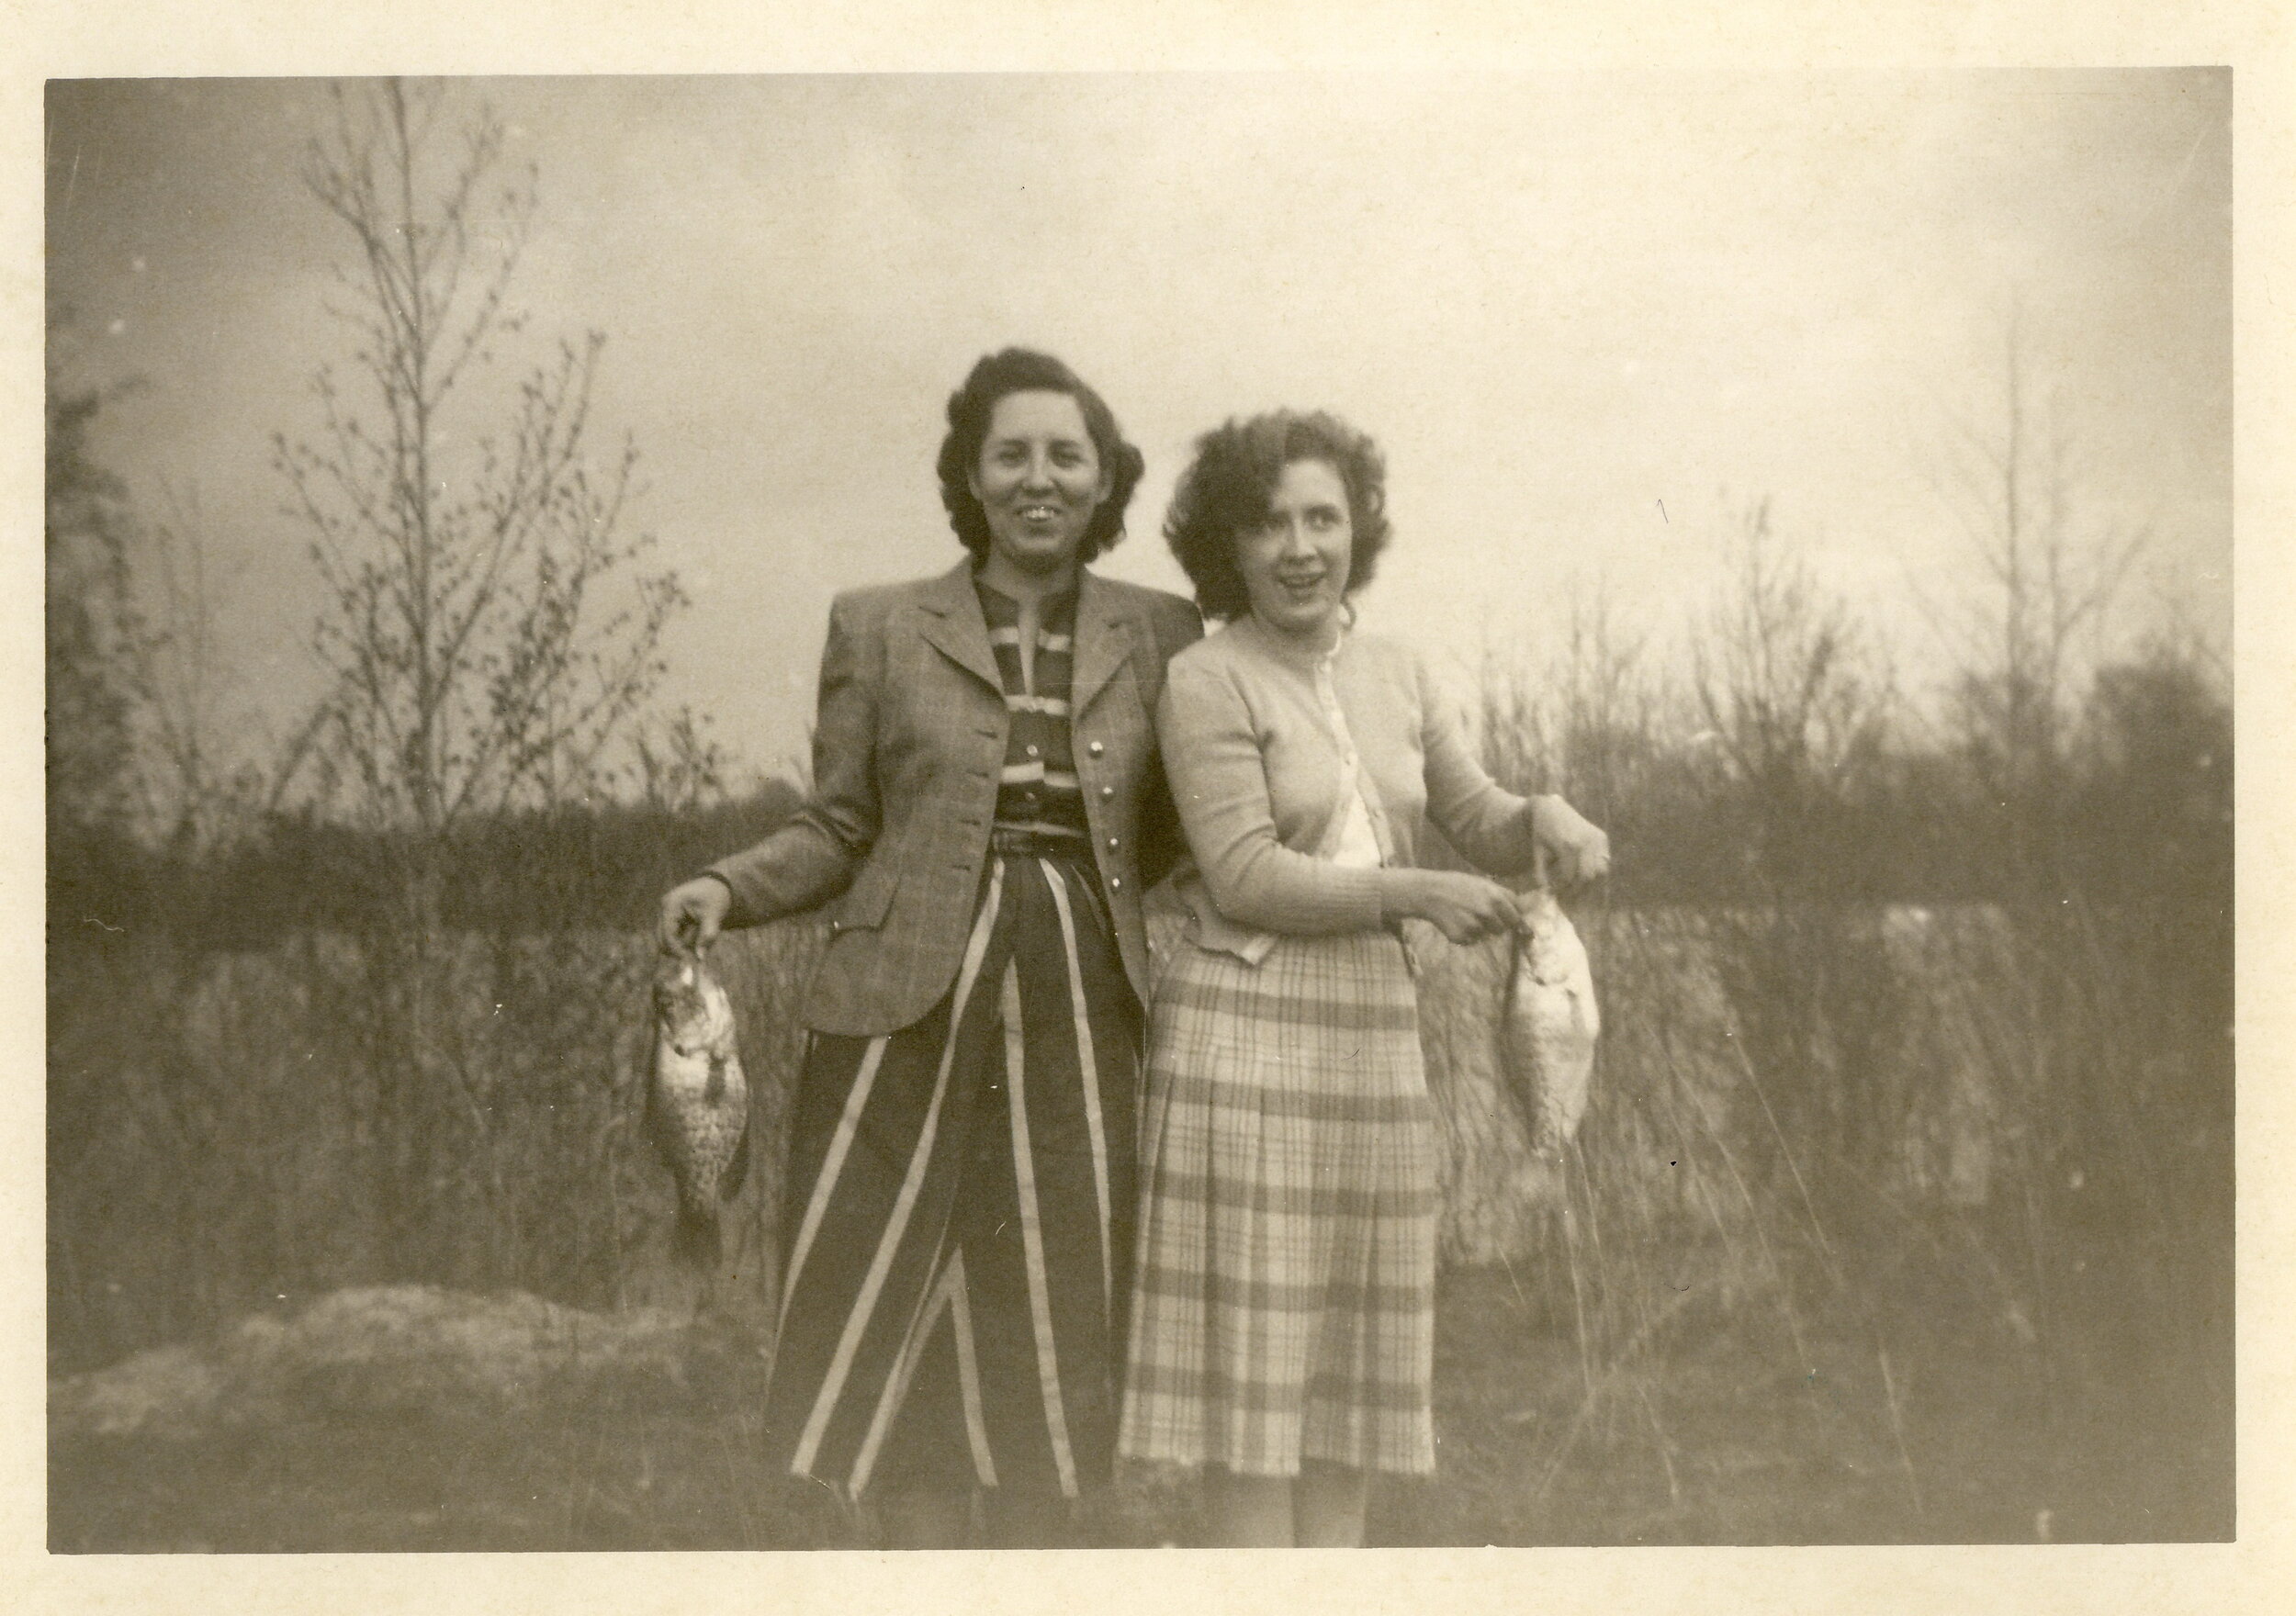 Geraldine and Friend, 1940's